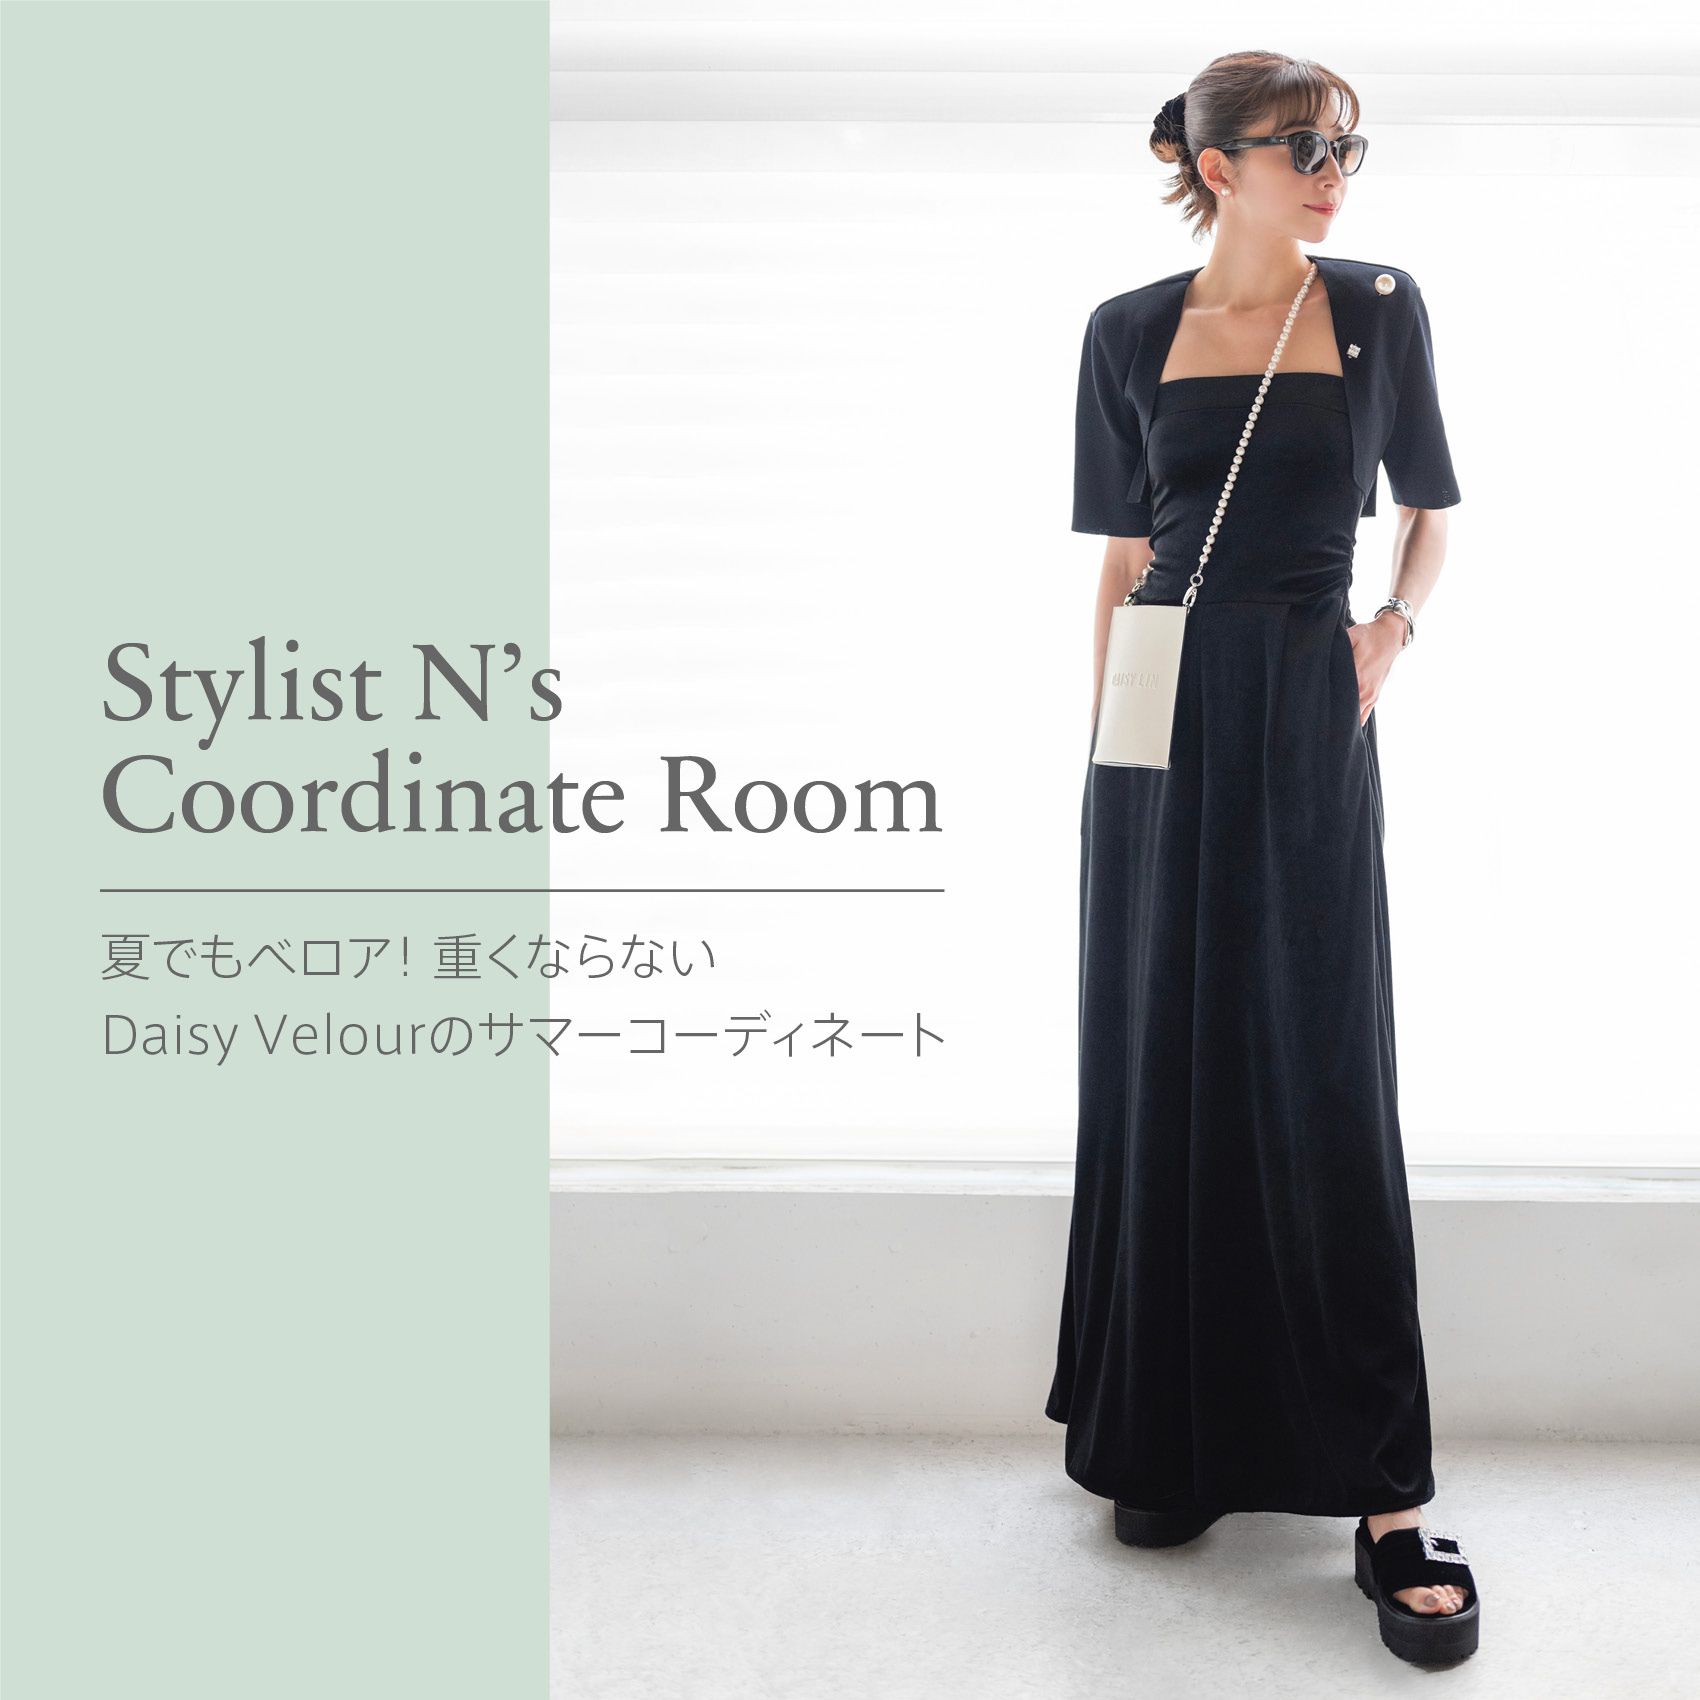 Stylist N’s Coordinate Room "Daisy Velourのサマーコーディネート"